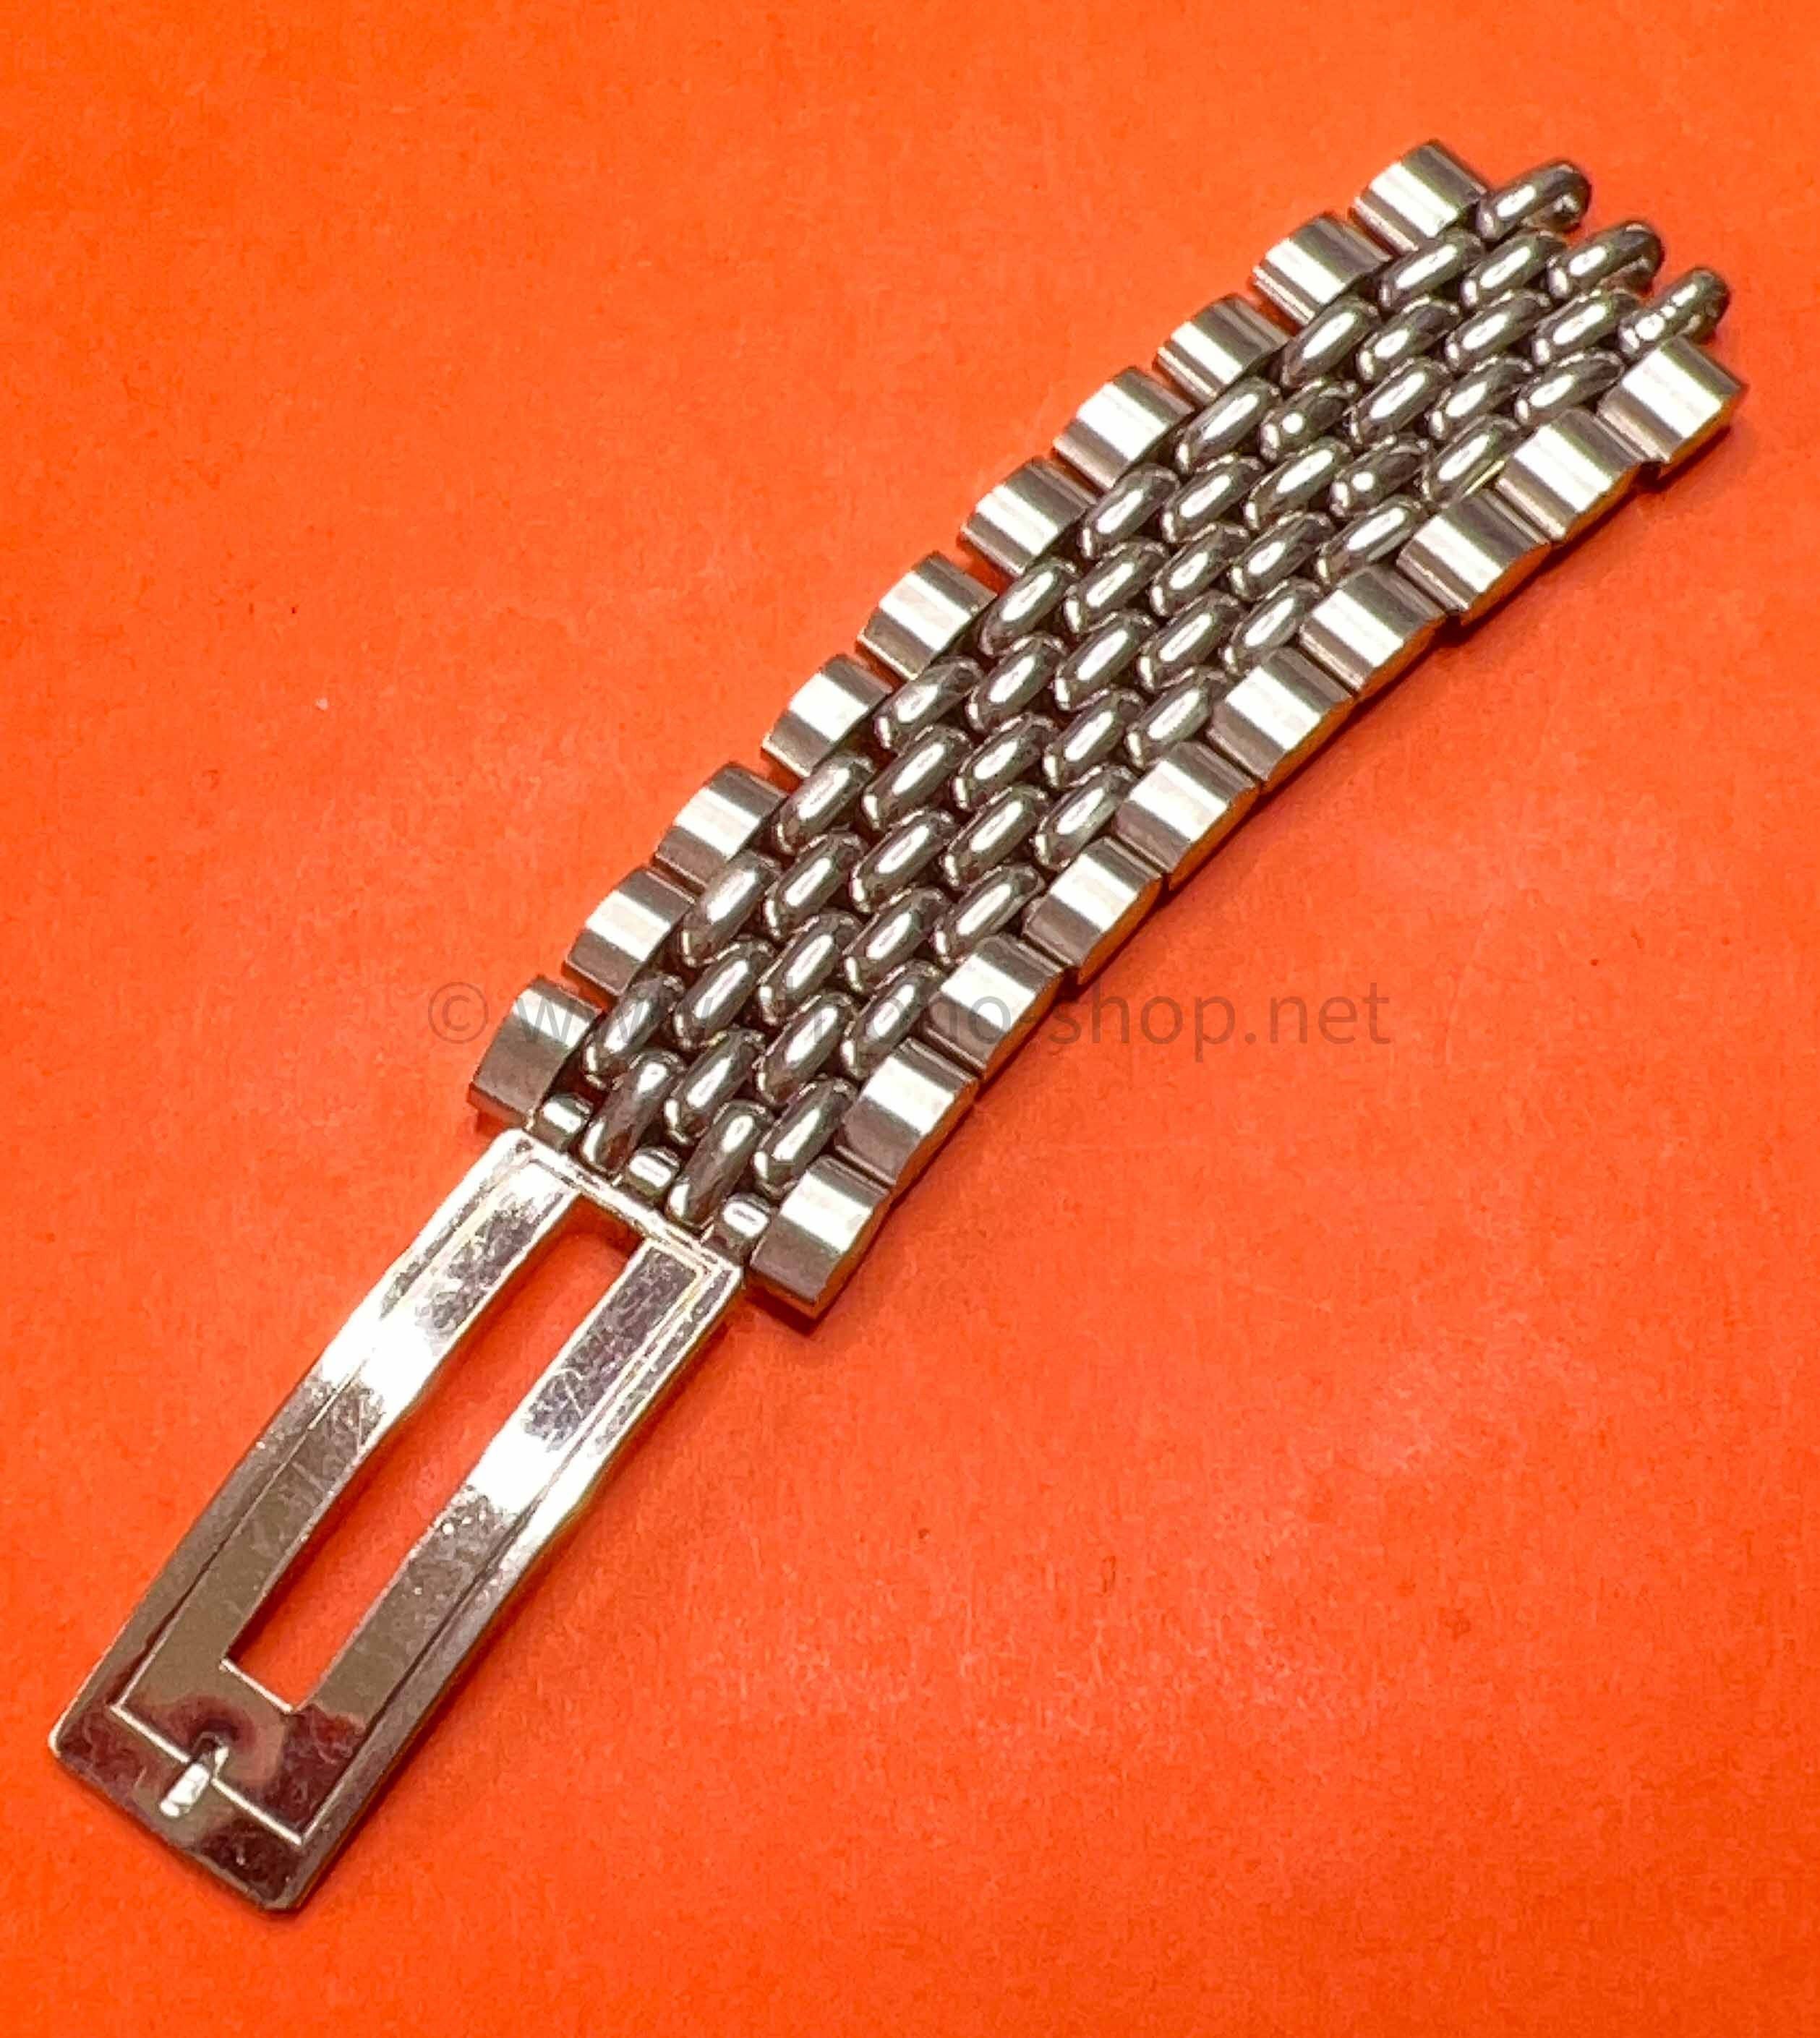 Vintage Collectible watch Ssteel Partial half bracelet part Beads of Rice 60's Heuer,IWC,Omega,Breitling,Vacheron